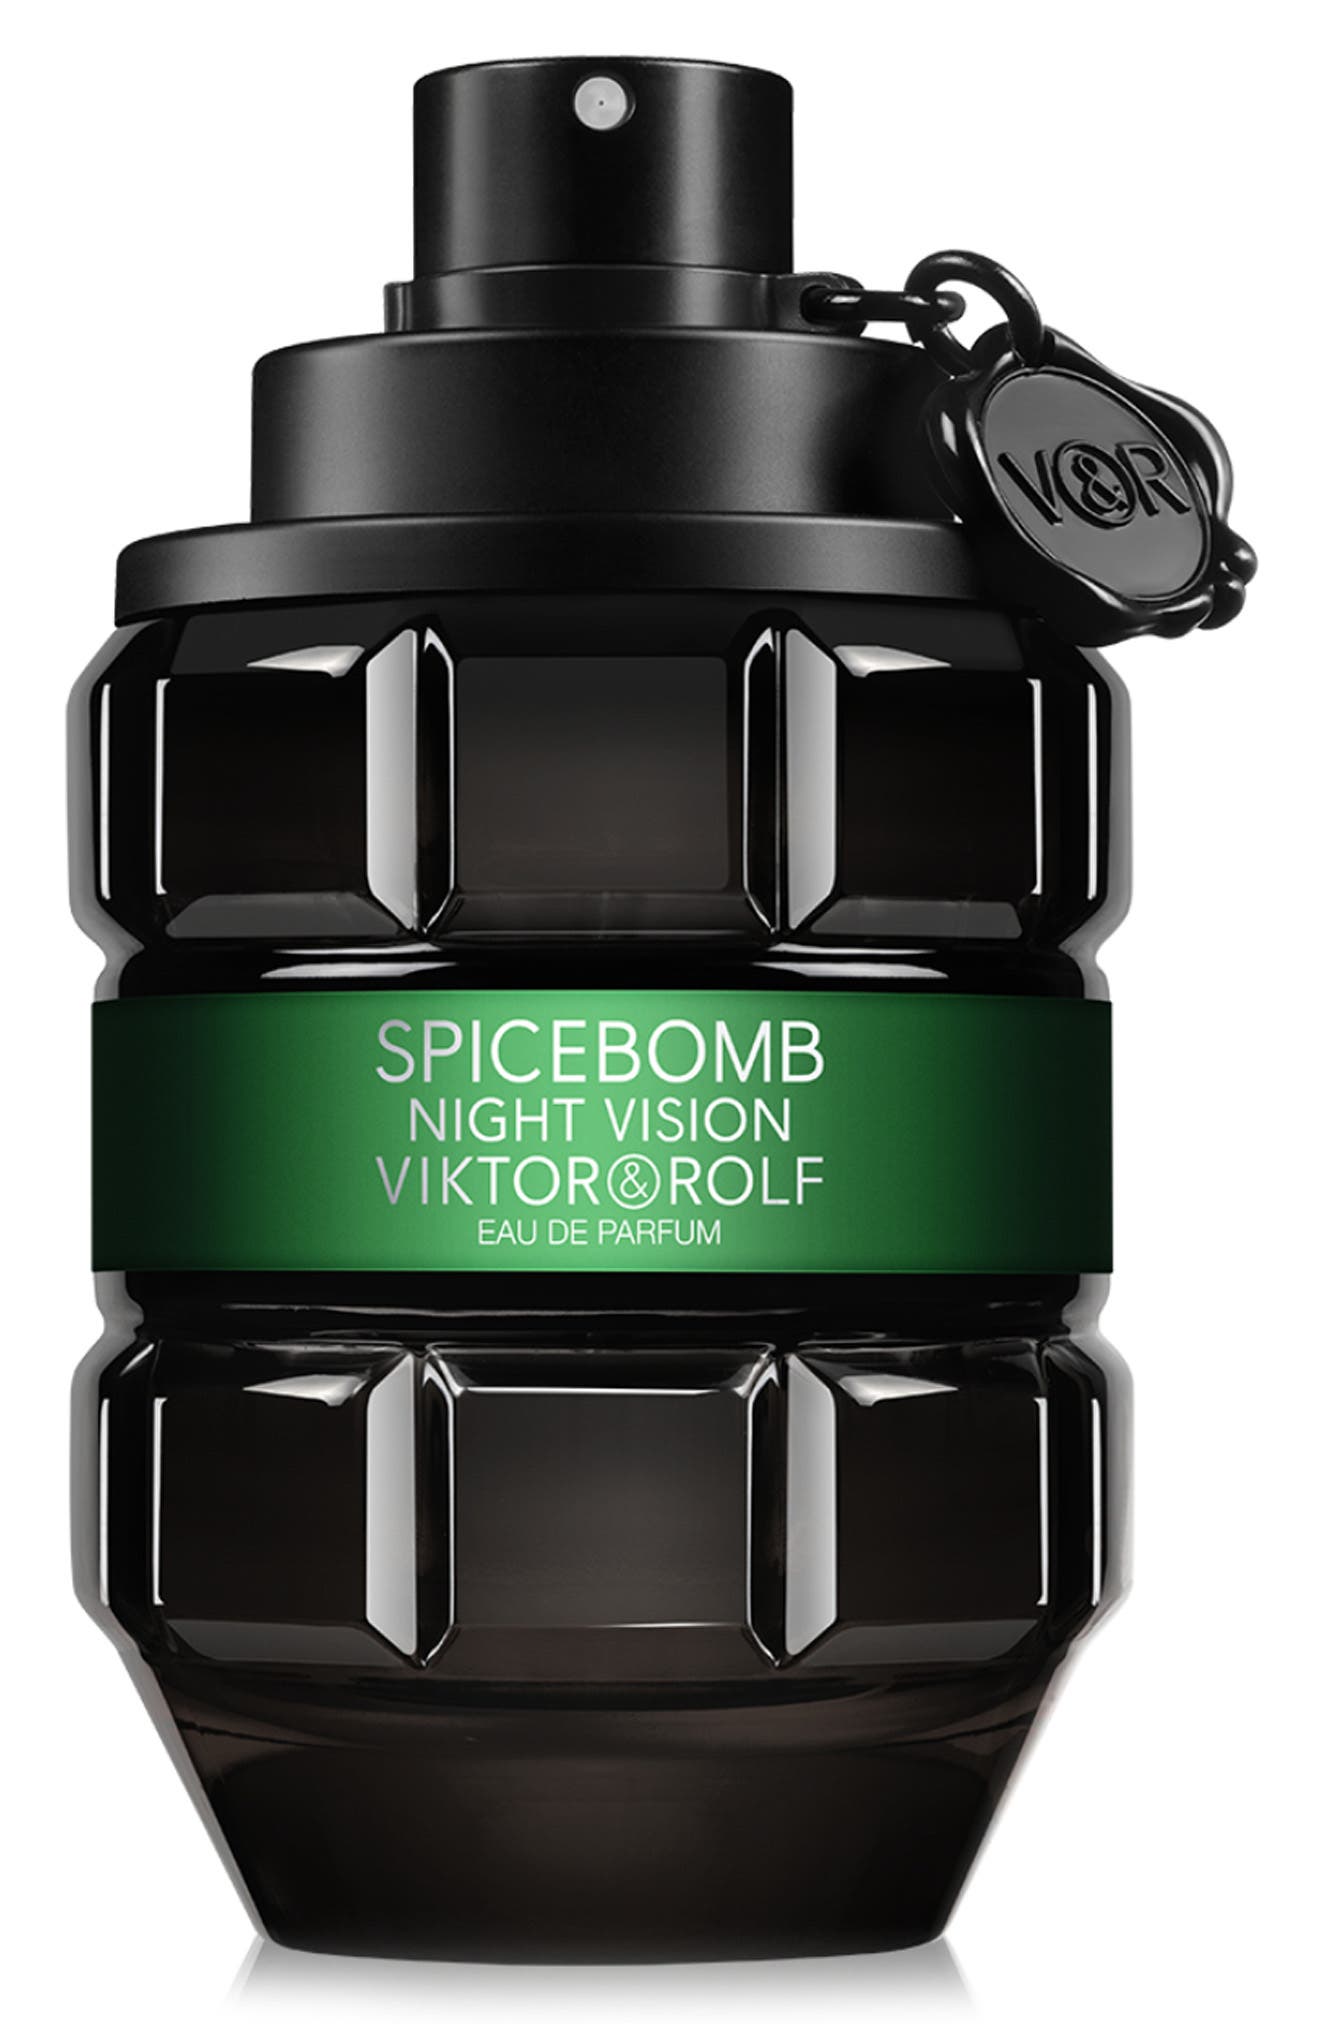 Viktor & Rolf Spicebomb Night Vision Eau de Parfum at Nordstrom, Size 1.7 Oz